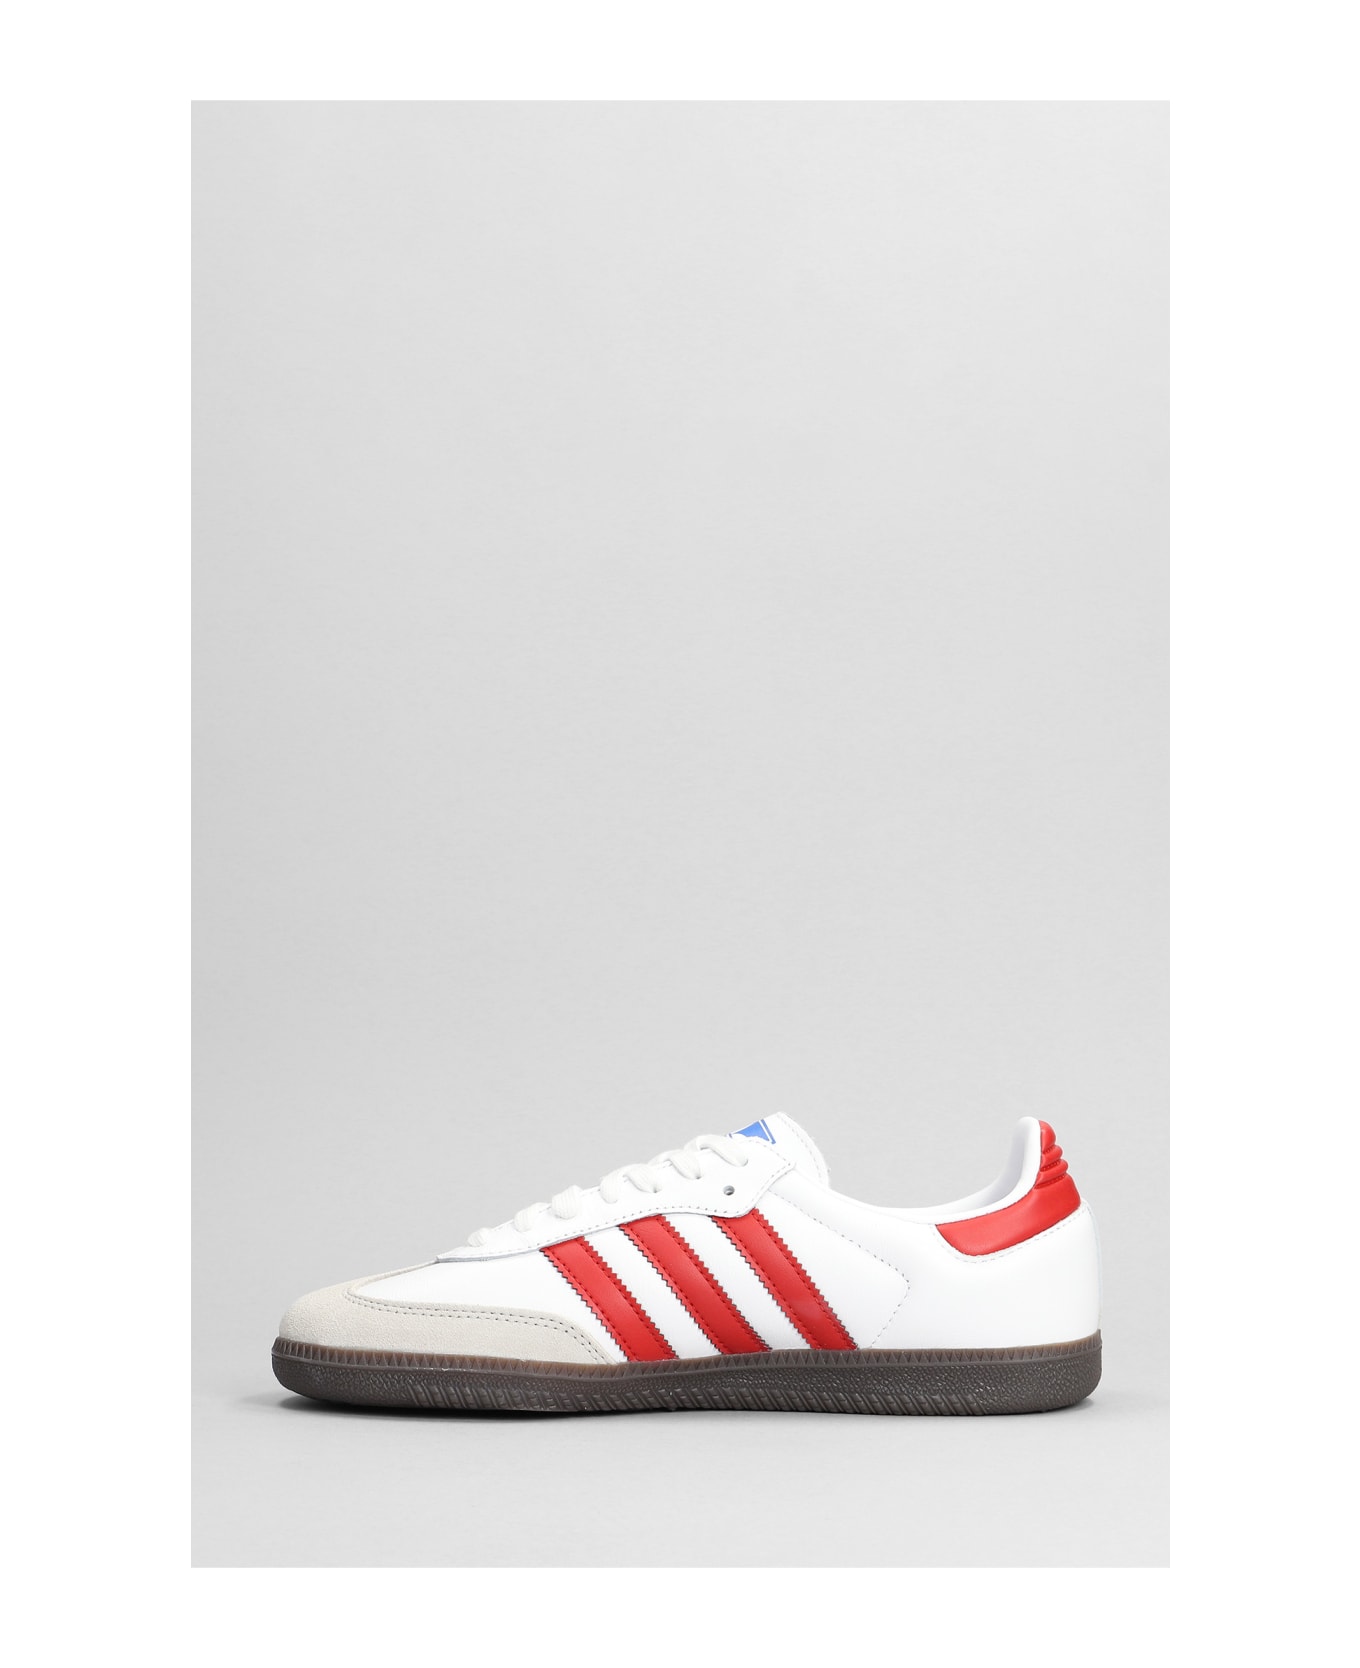 Adidas Originals Samba Leather Sneakers - WHITE/RED